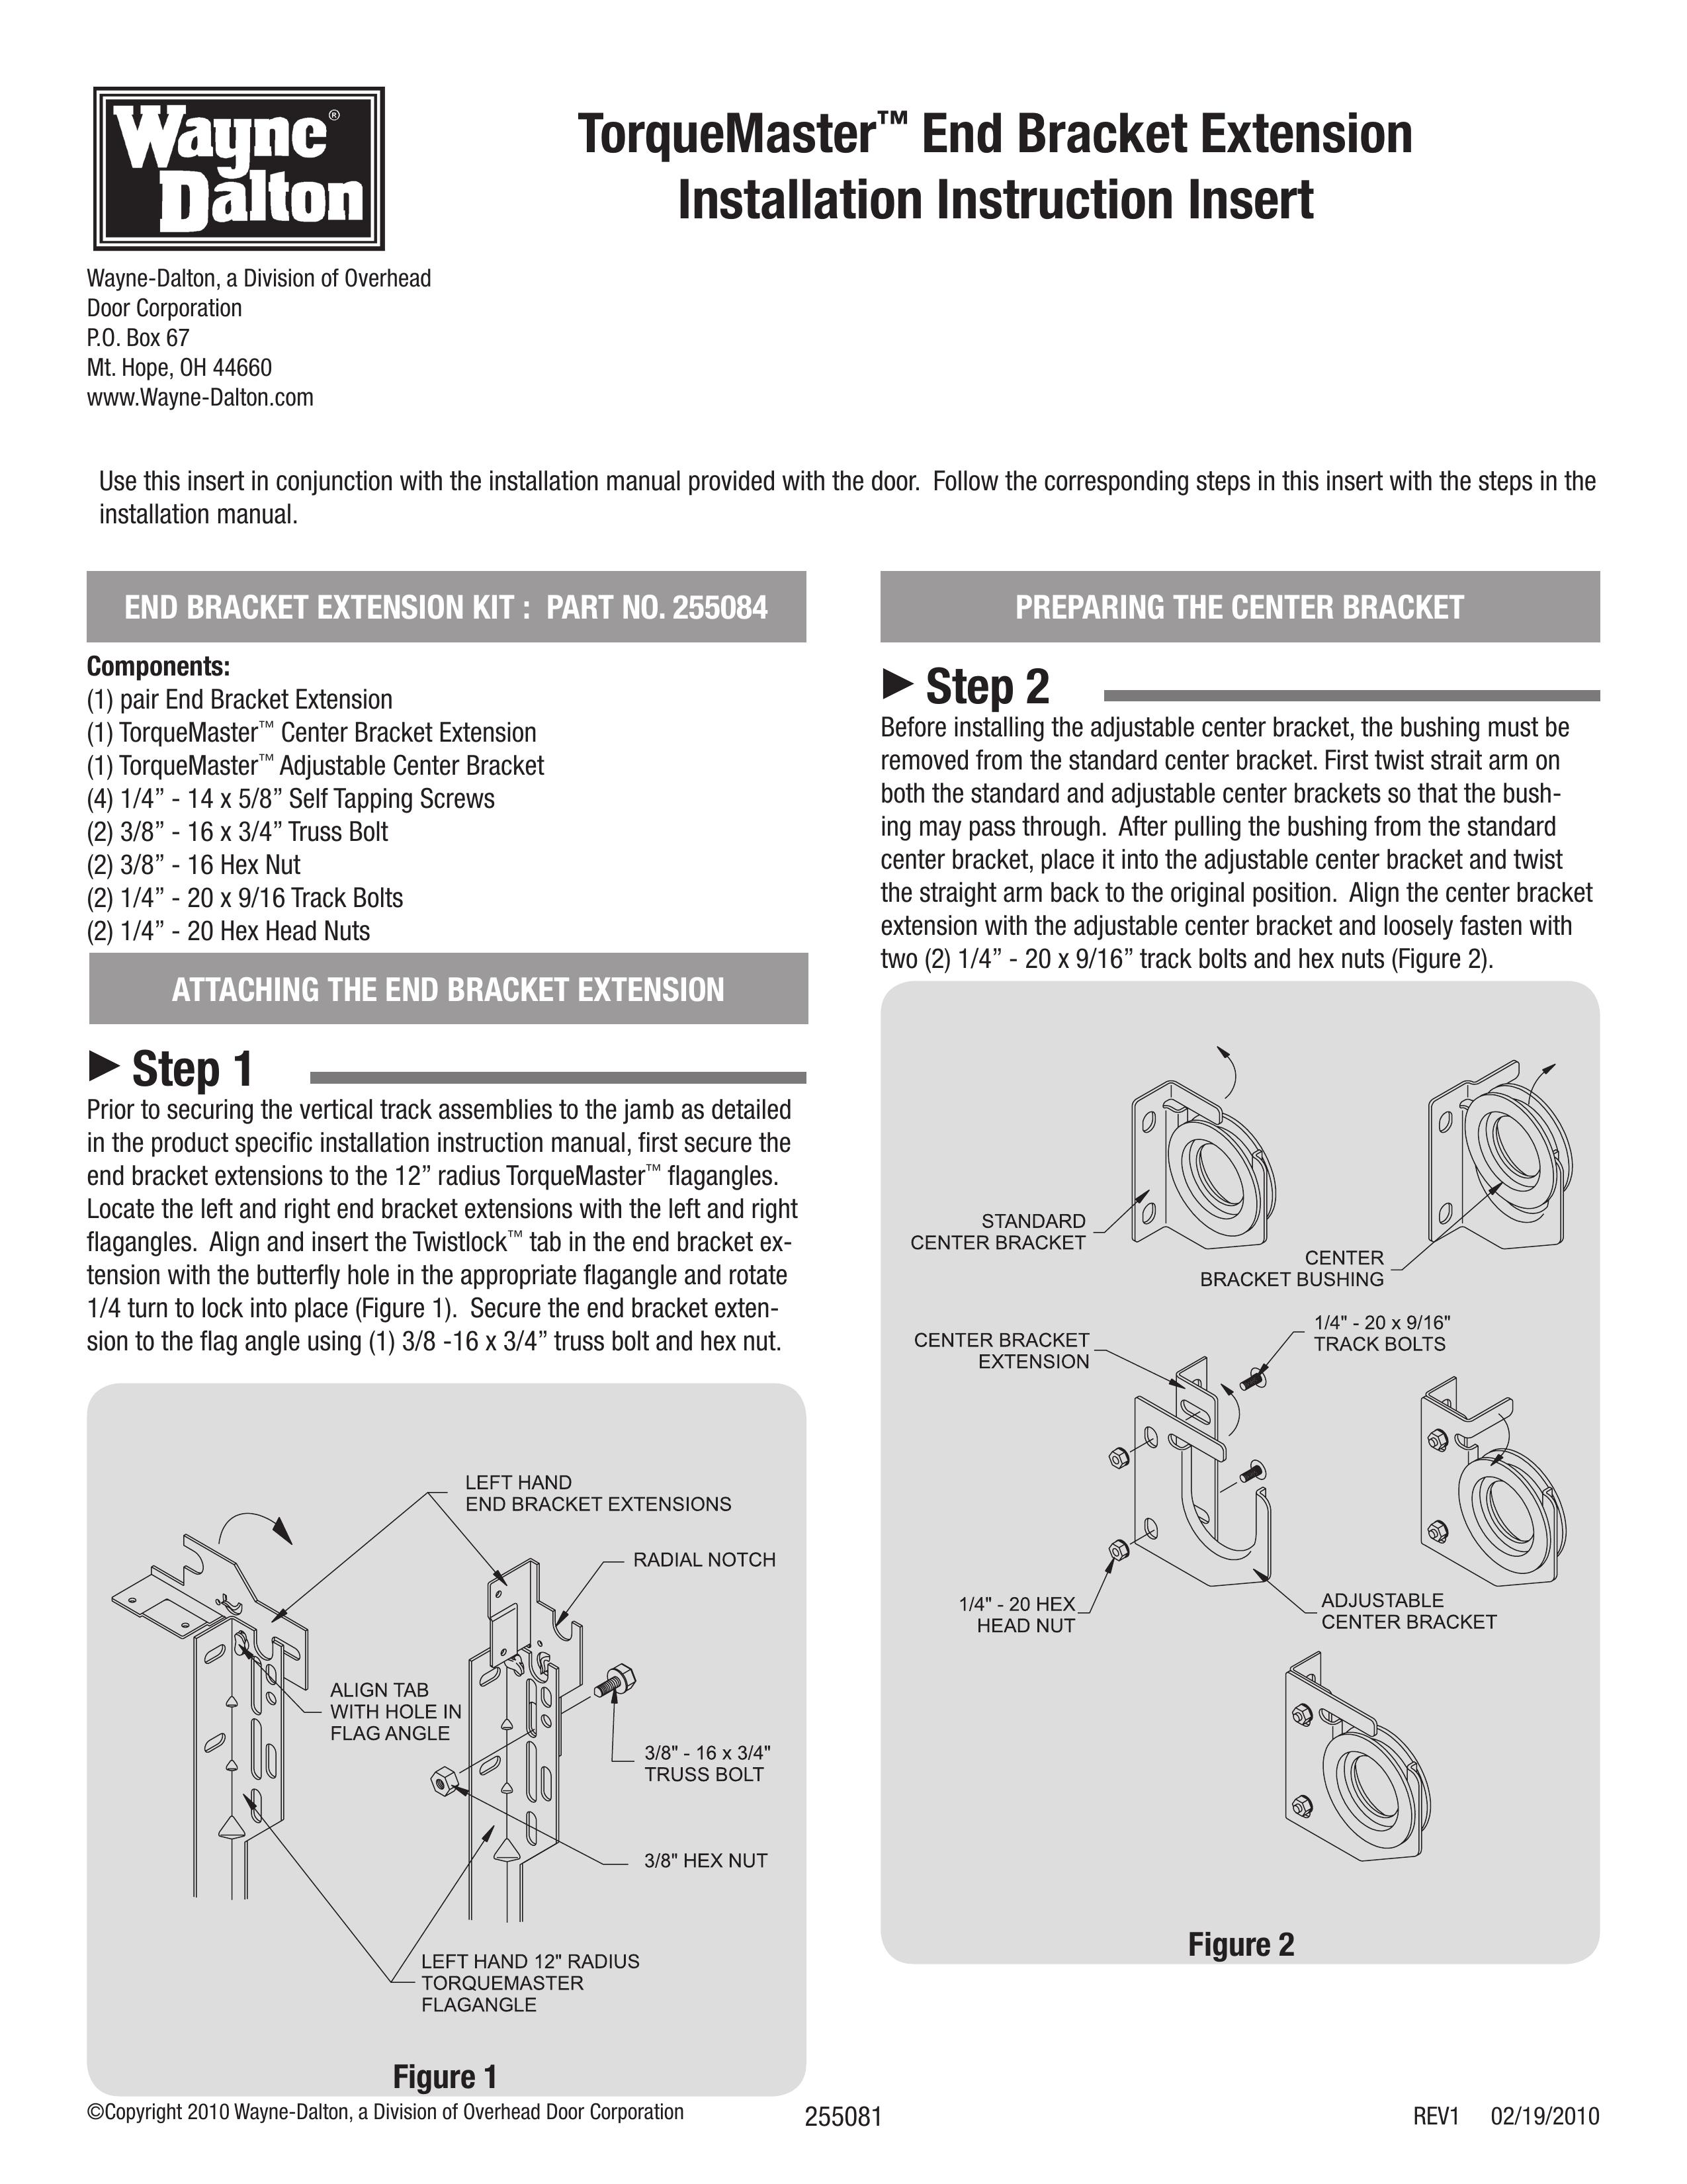 Wayne-Dalton 255081 Medical Alarms User Manual